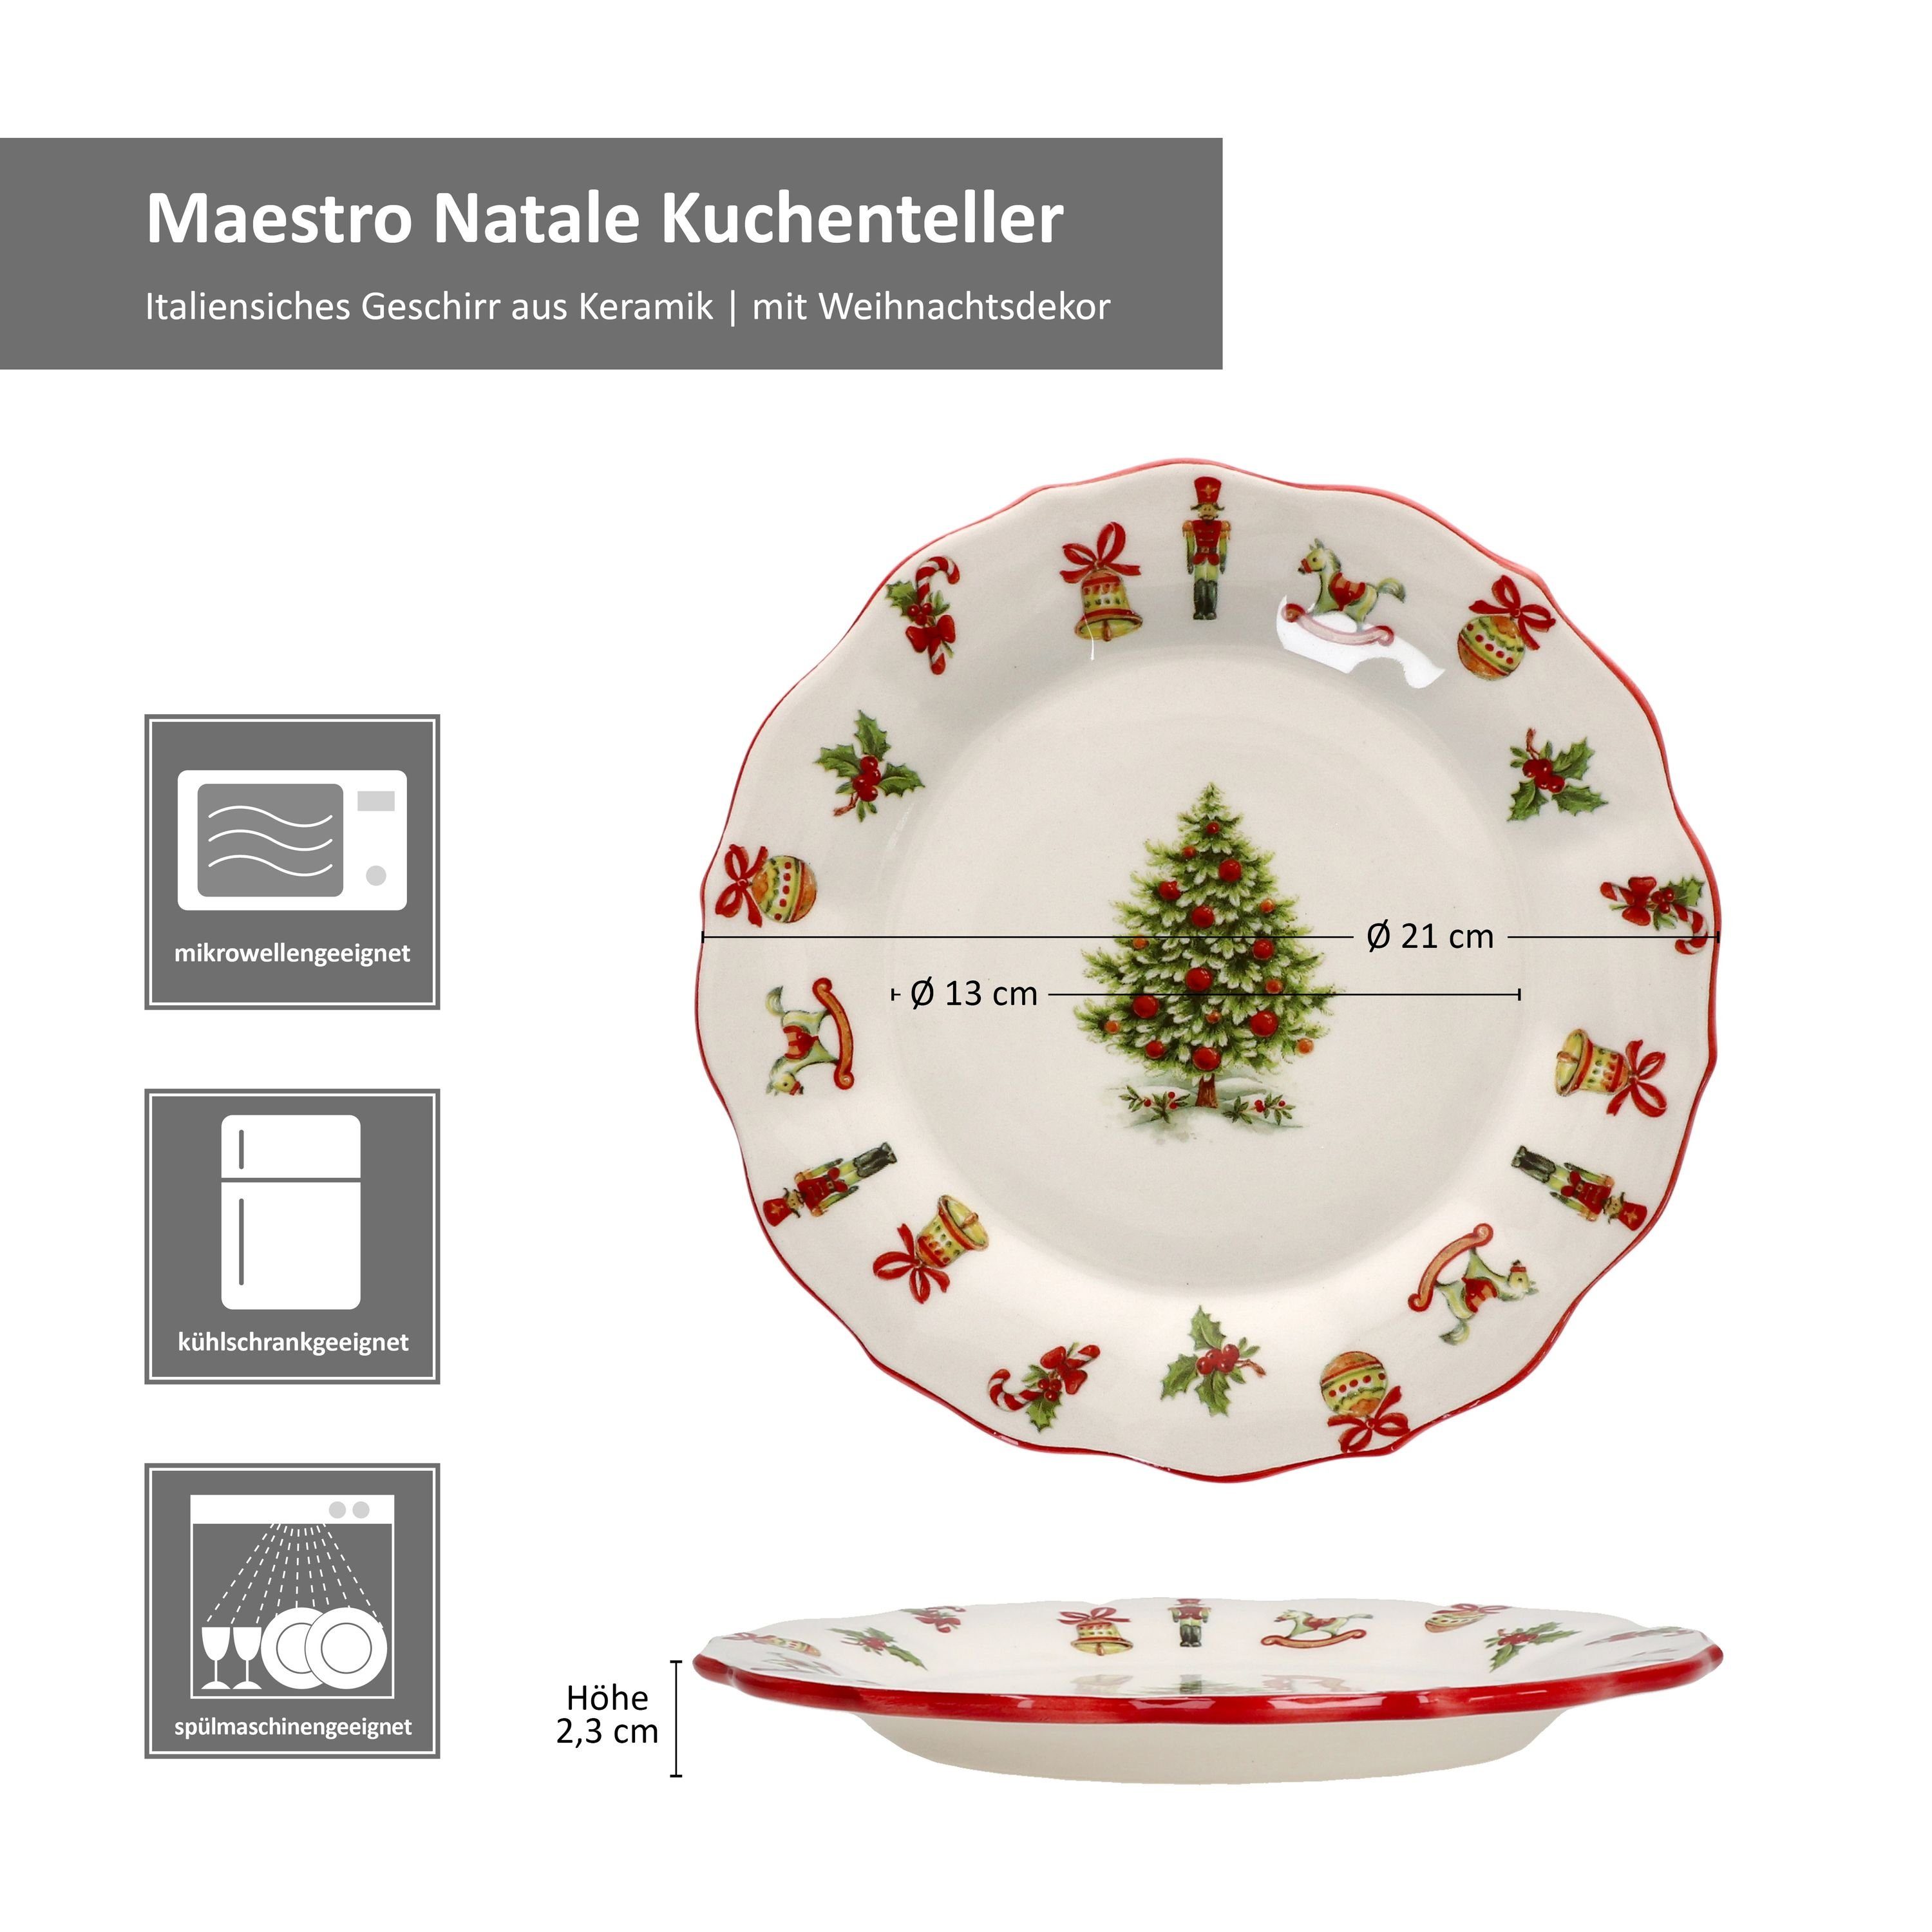 Frühstücksteller Kuchenteller Maestro Natale MamboCat 4x Keramik Dessert-Teller Weihnachten